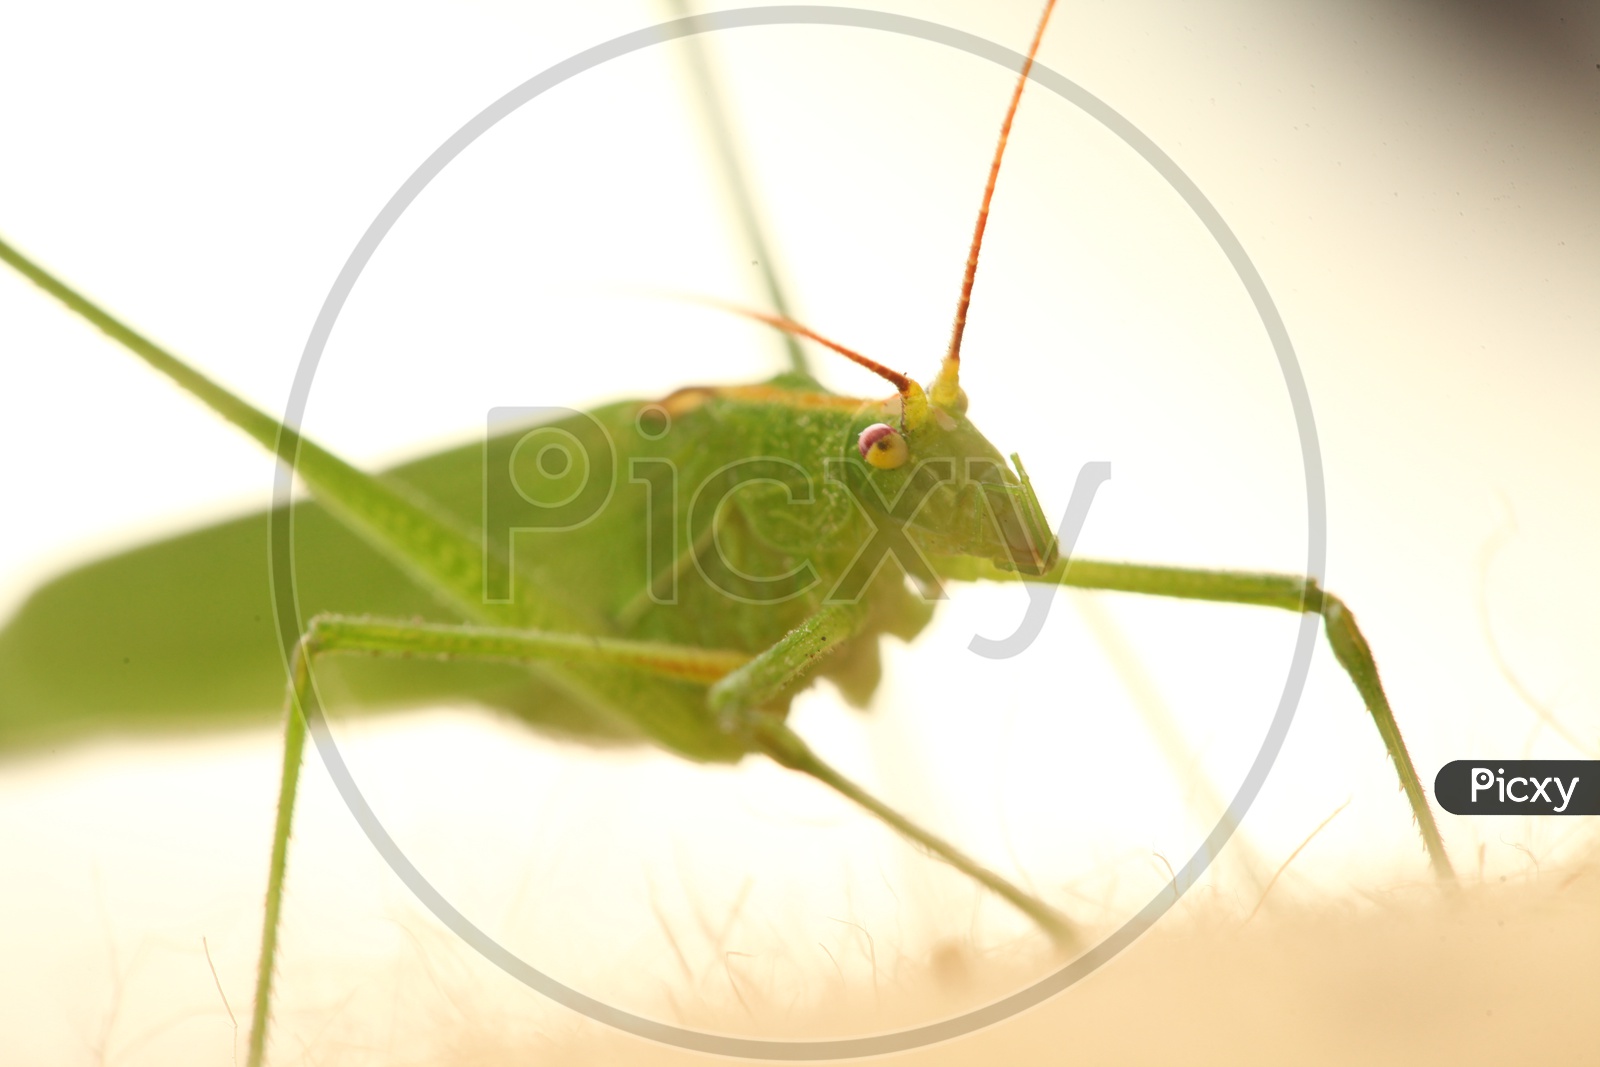 A Grasshopper